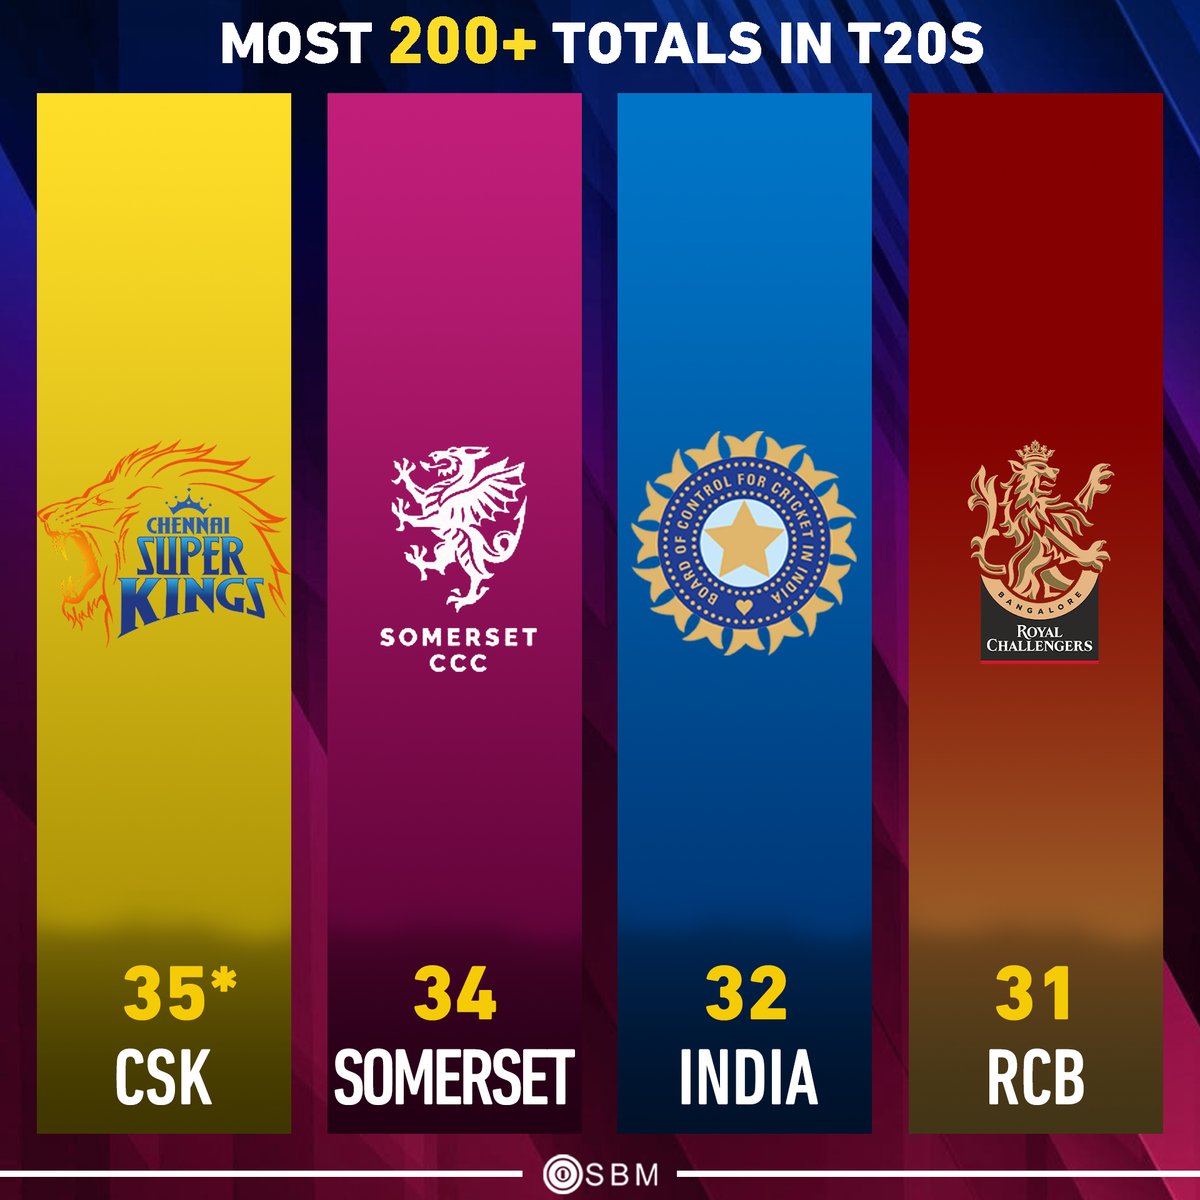 Chennai Super Kings have scored the most 200+ totals in T20 history.

#RuturajGaikwad #DarylMitchell #ShivamDube #MSDhoni #MahendraSinghDhoni #CSKvSRH #CSKvsSRH #IPL #IPL2024 #Cricket #SBM